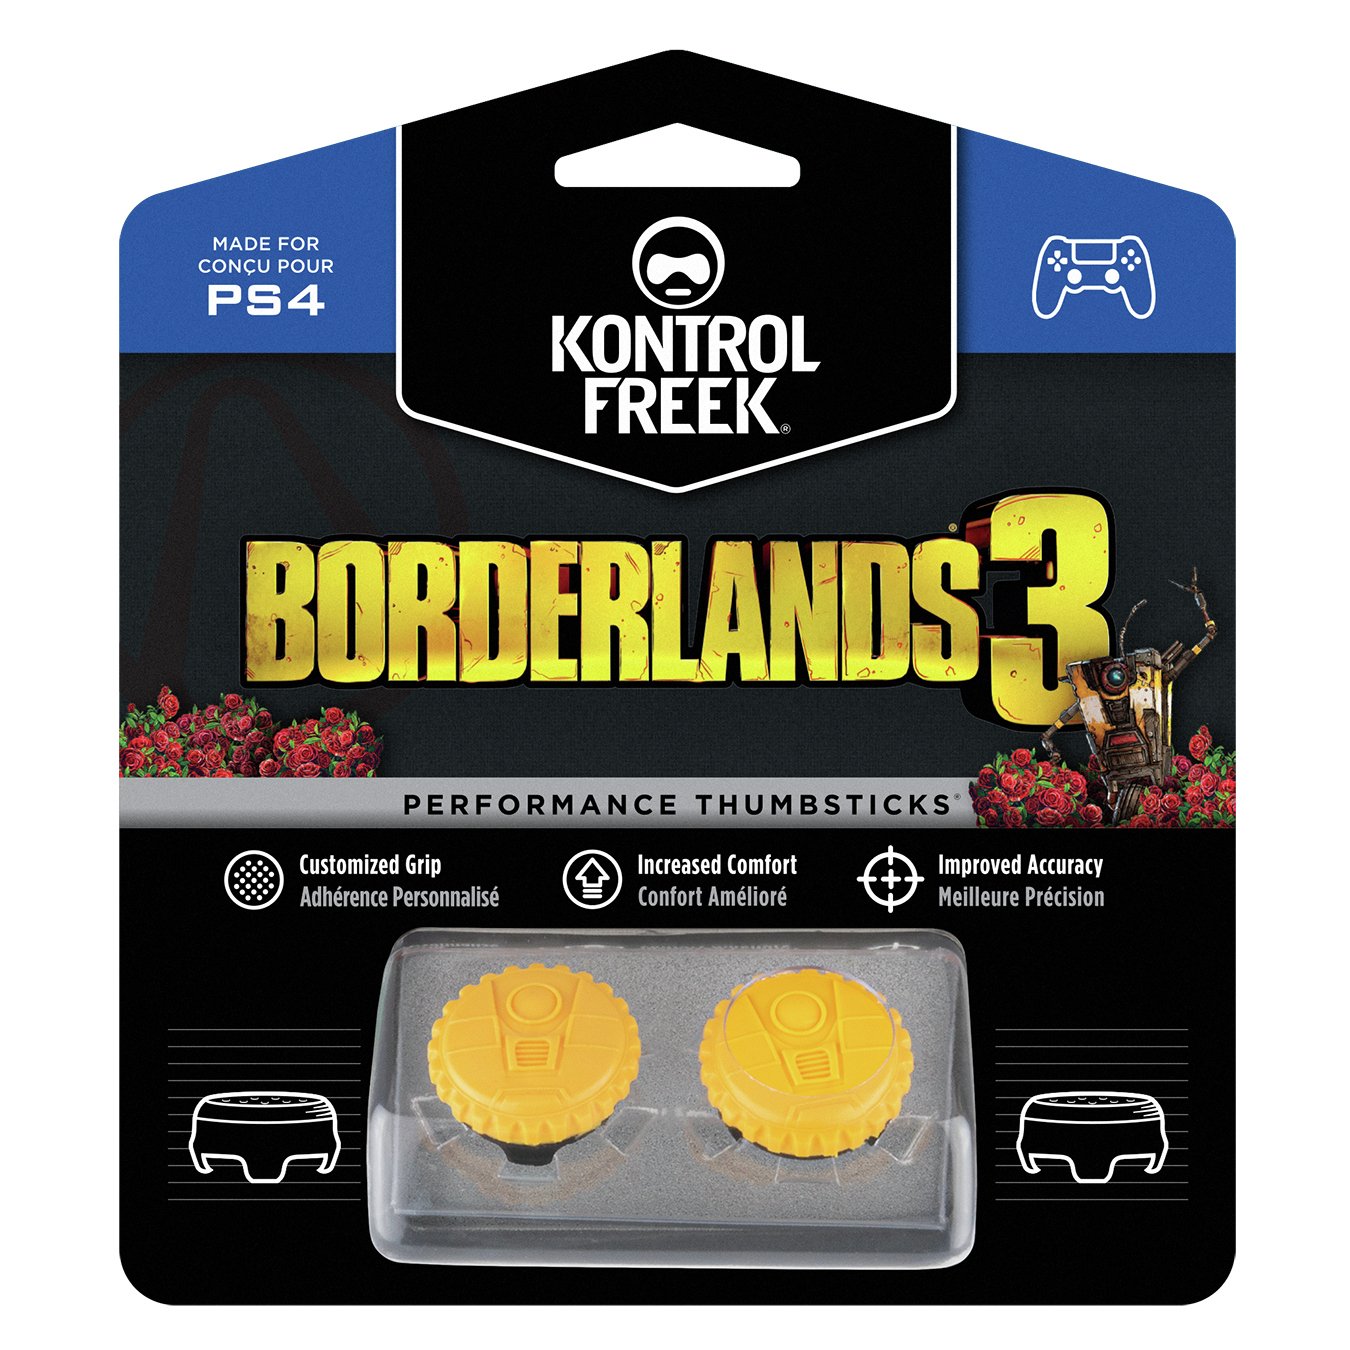 KontrolFreek Borderlands 3 PS4 Performance Thumbsticks